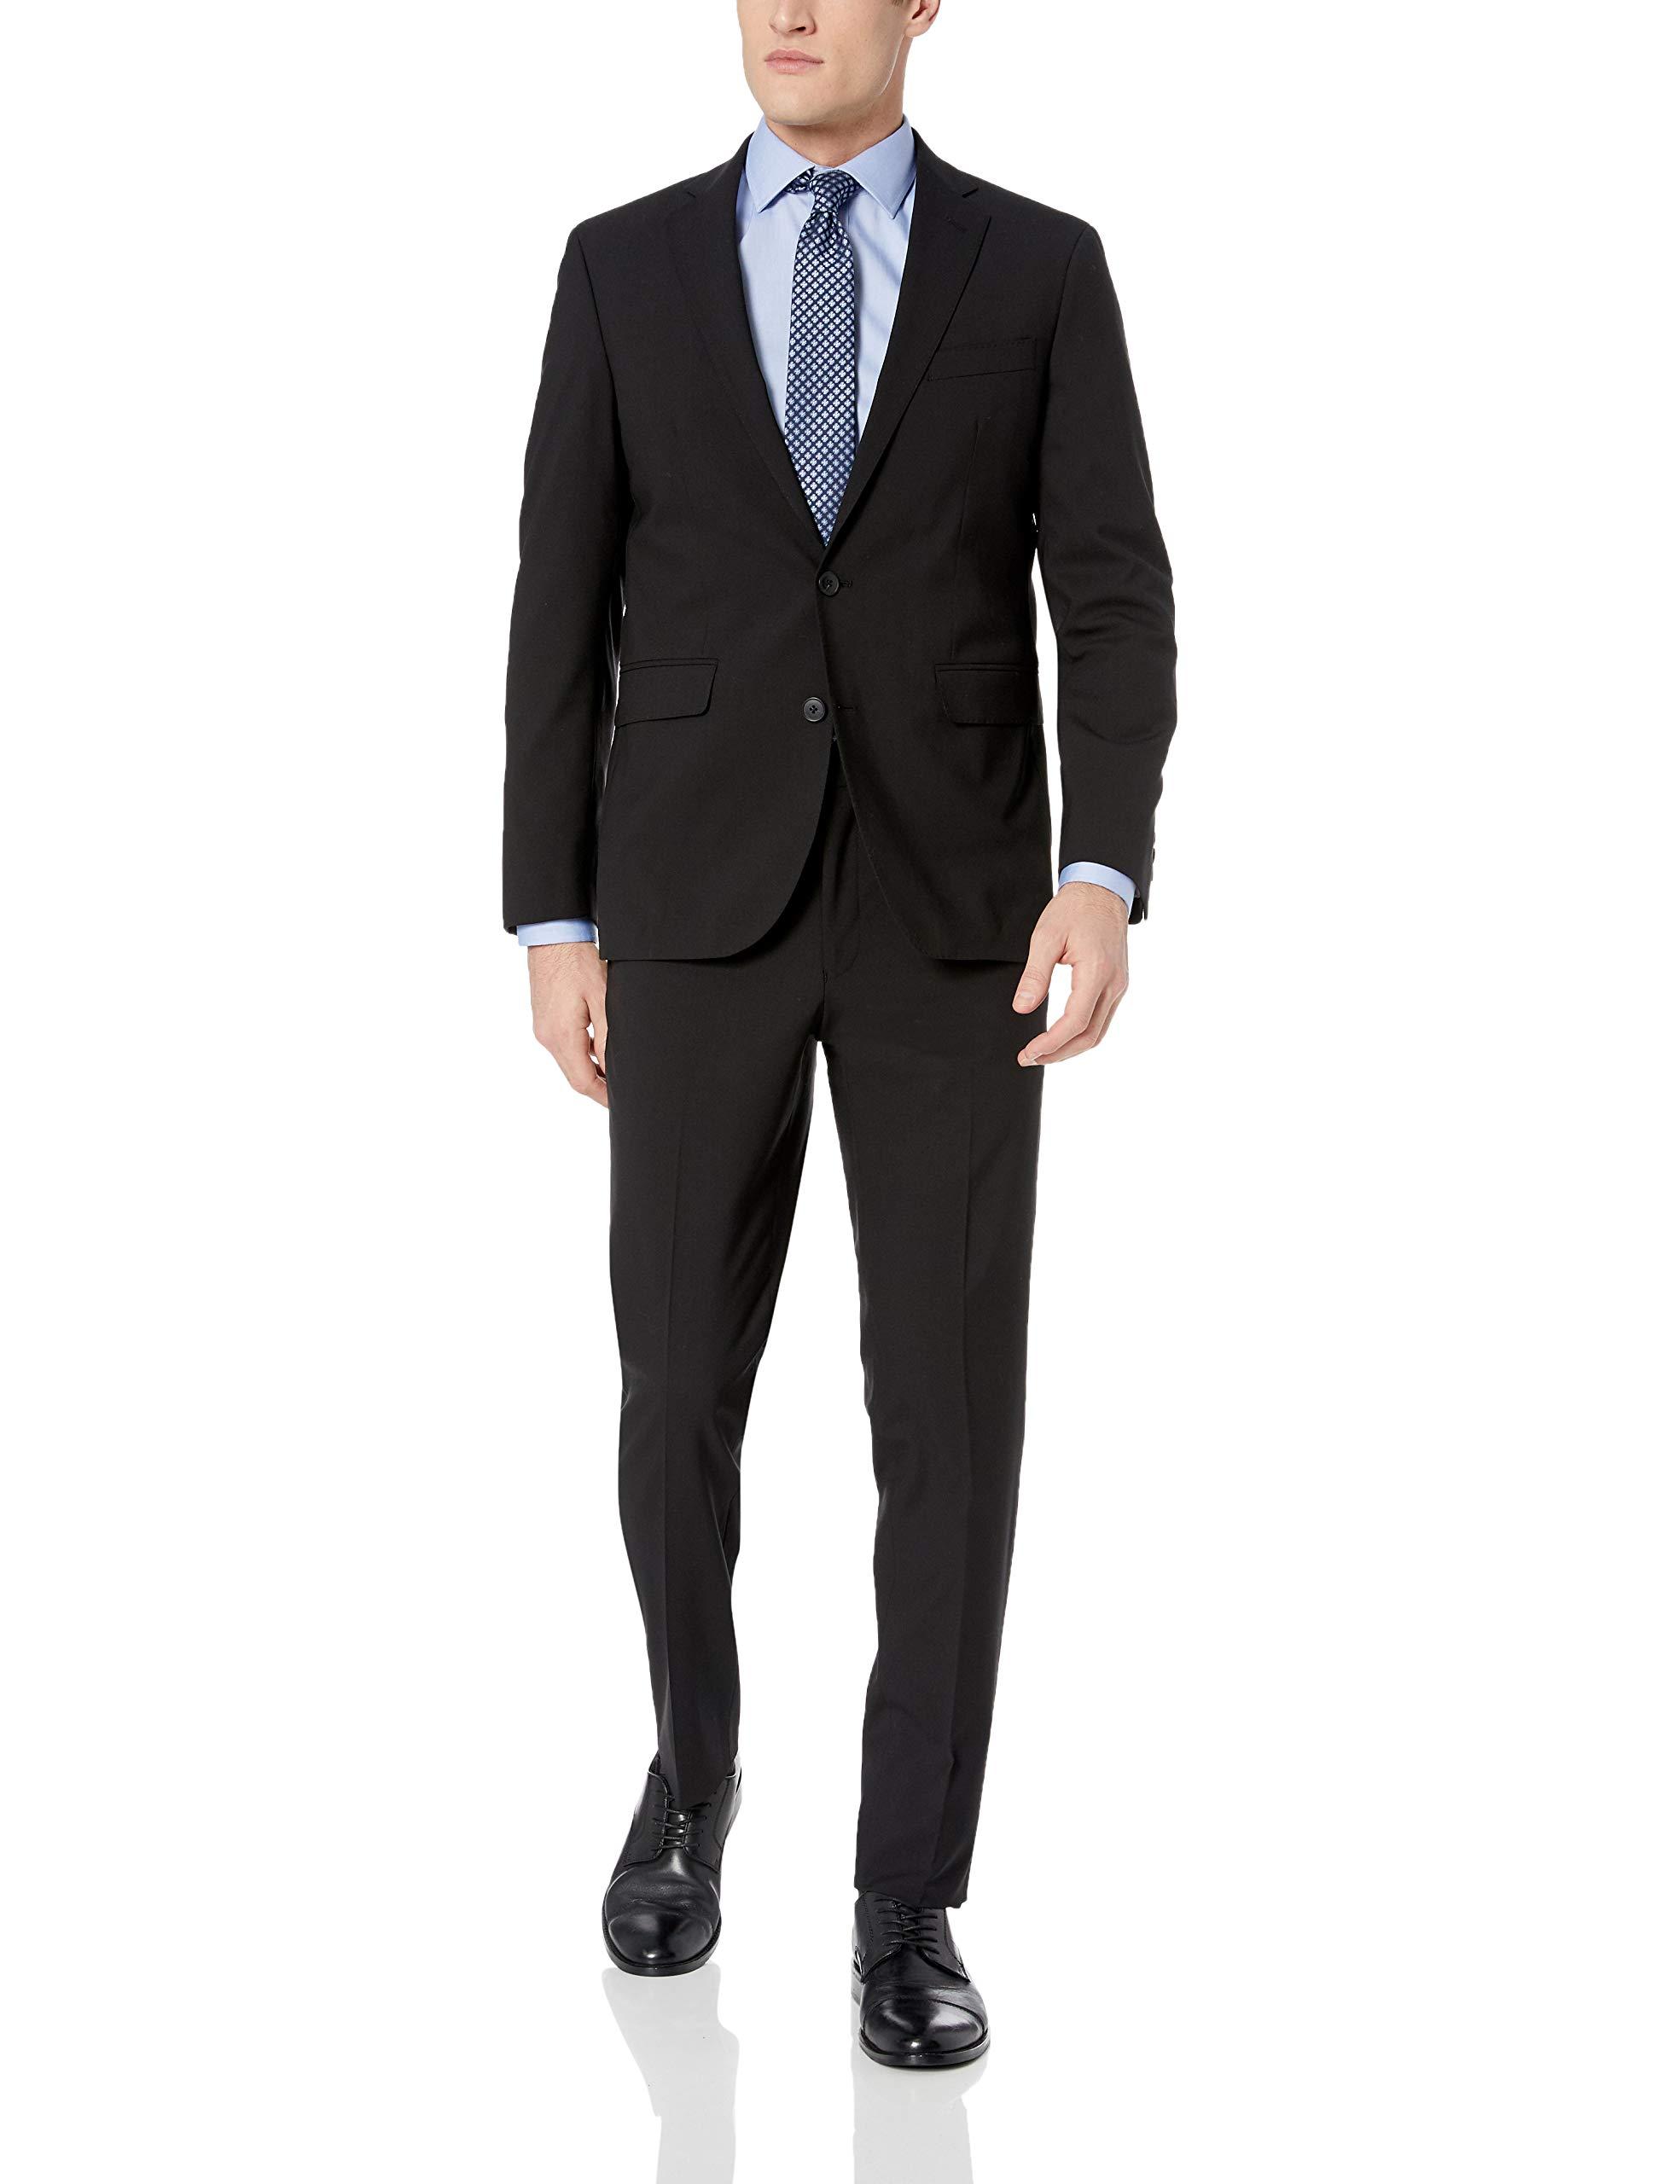 Cole Haan Slim Fit Suit in Black for Men - Lyst